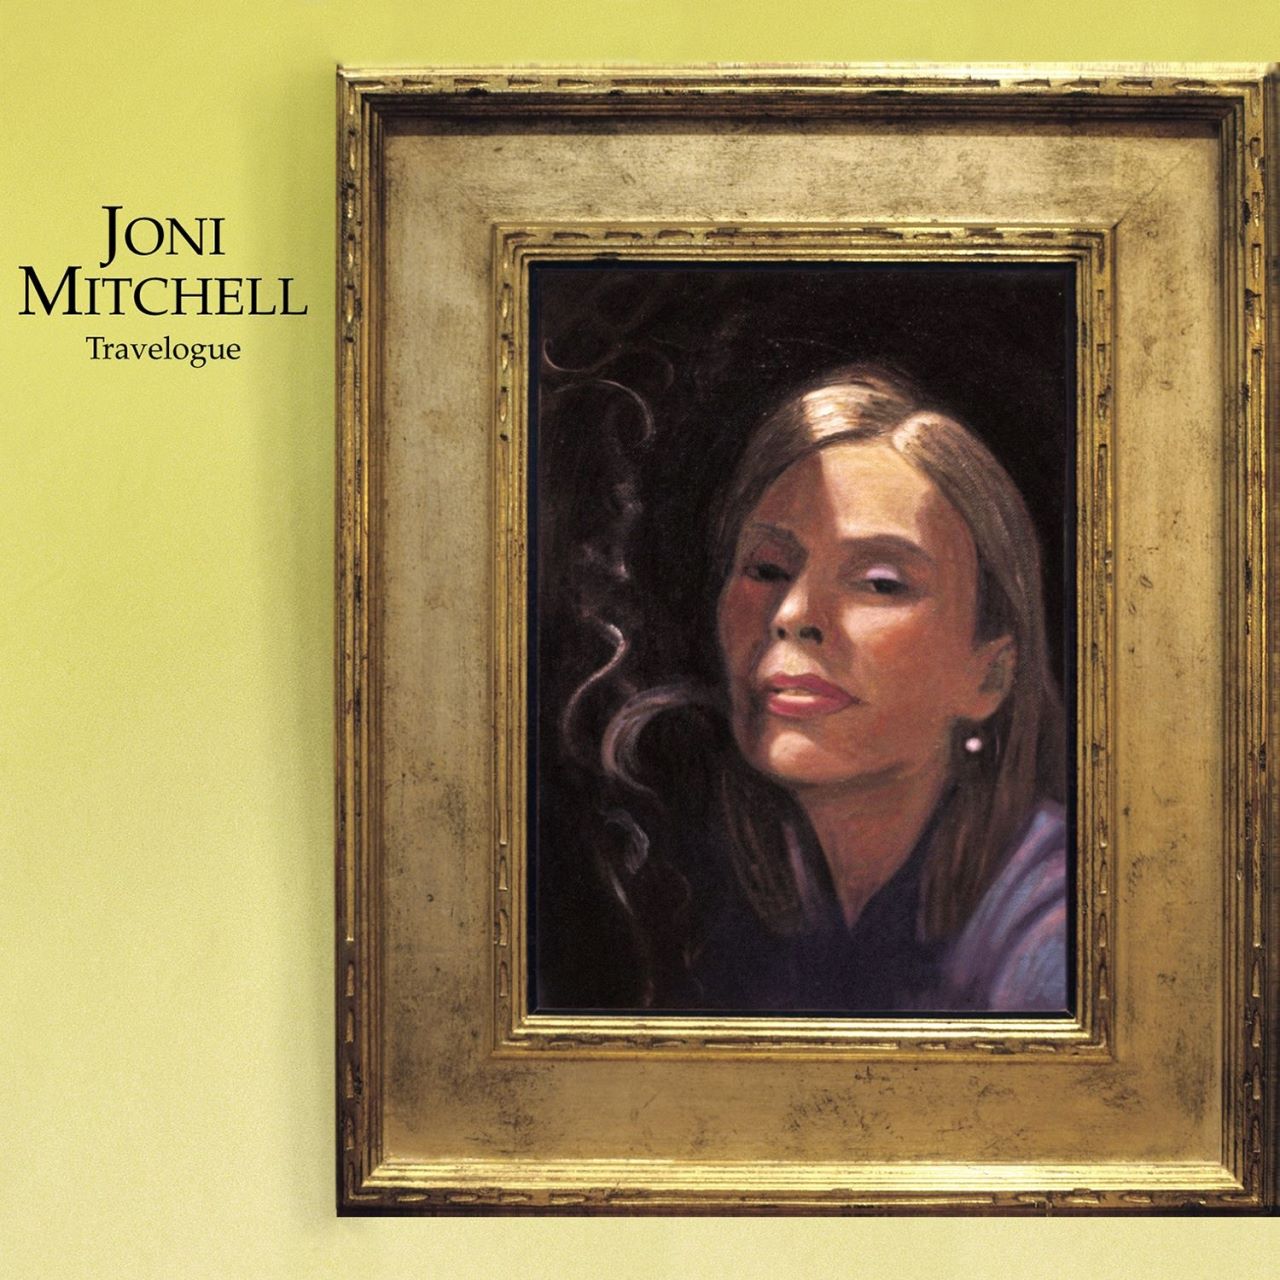 Joni Mitchell - Travelogue cover album